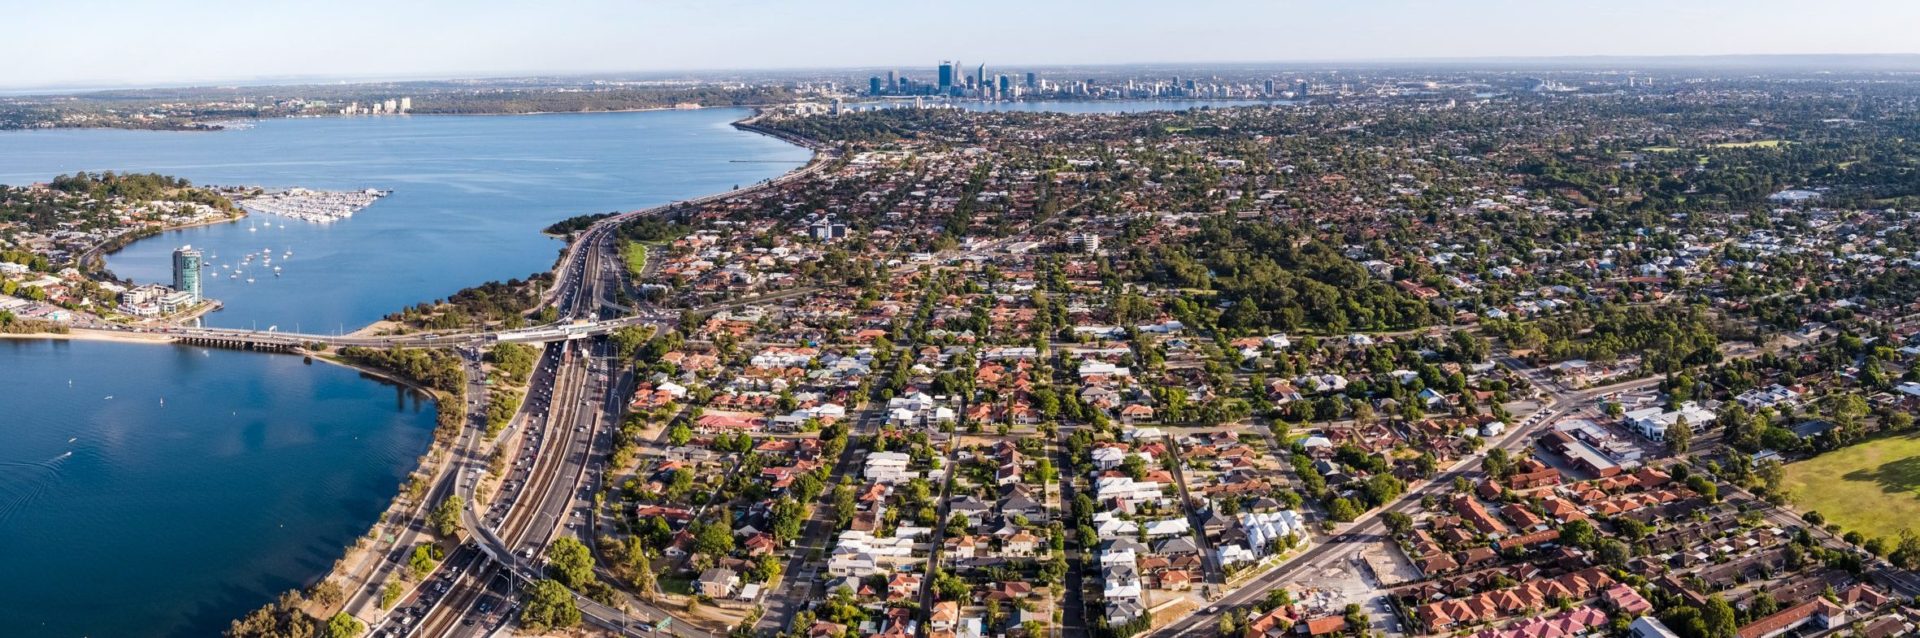 Investors embracing Perth’s potential growth